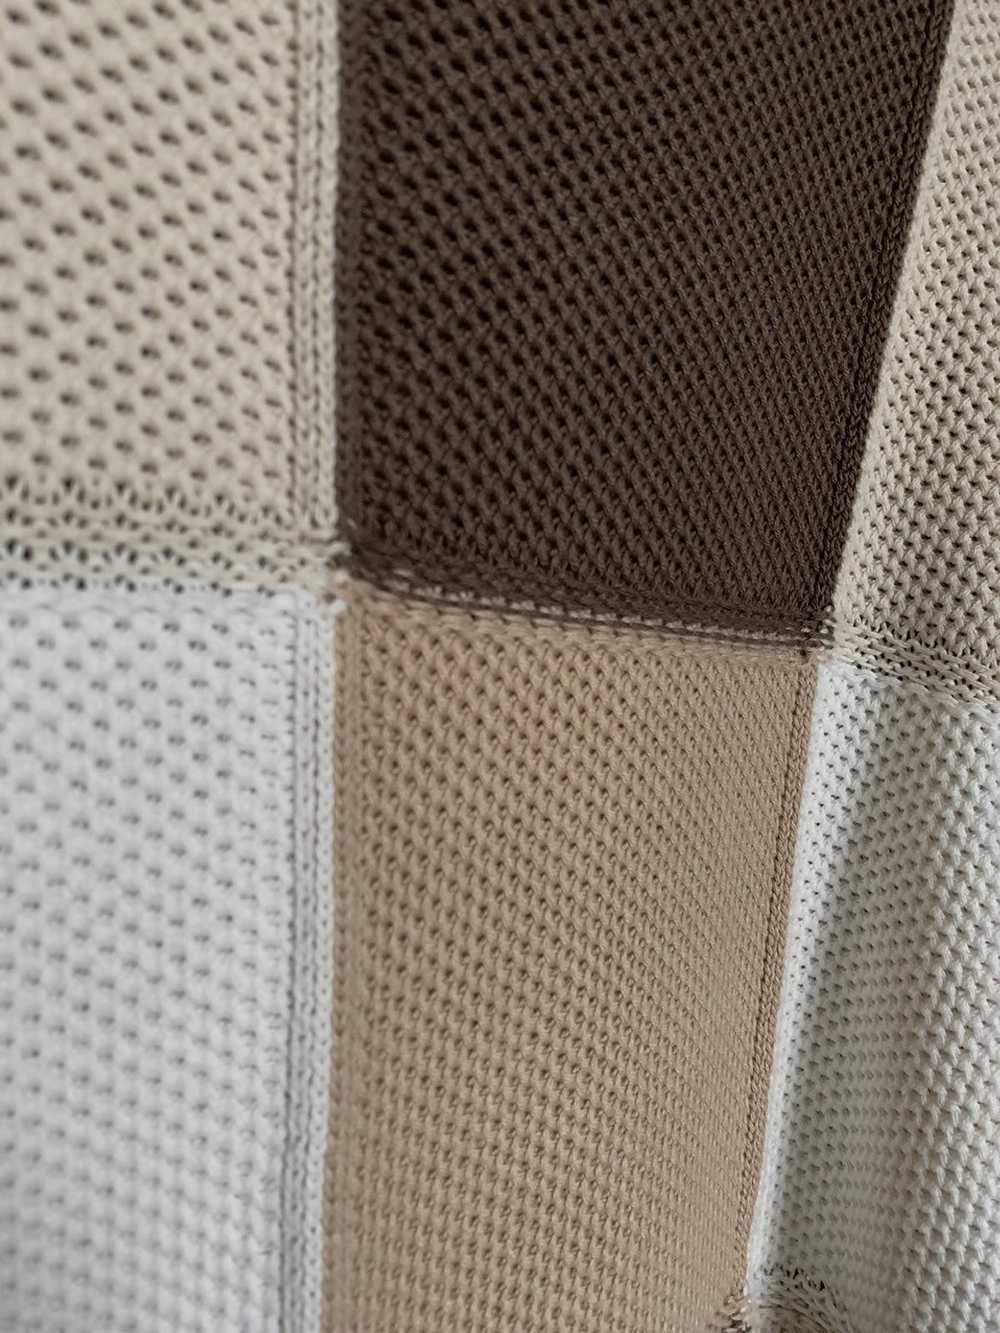 Zara Checkered Knit Sweater - image 3